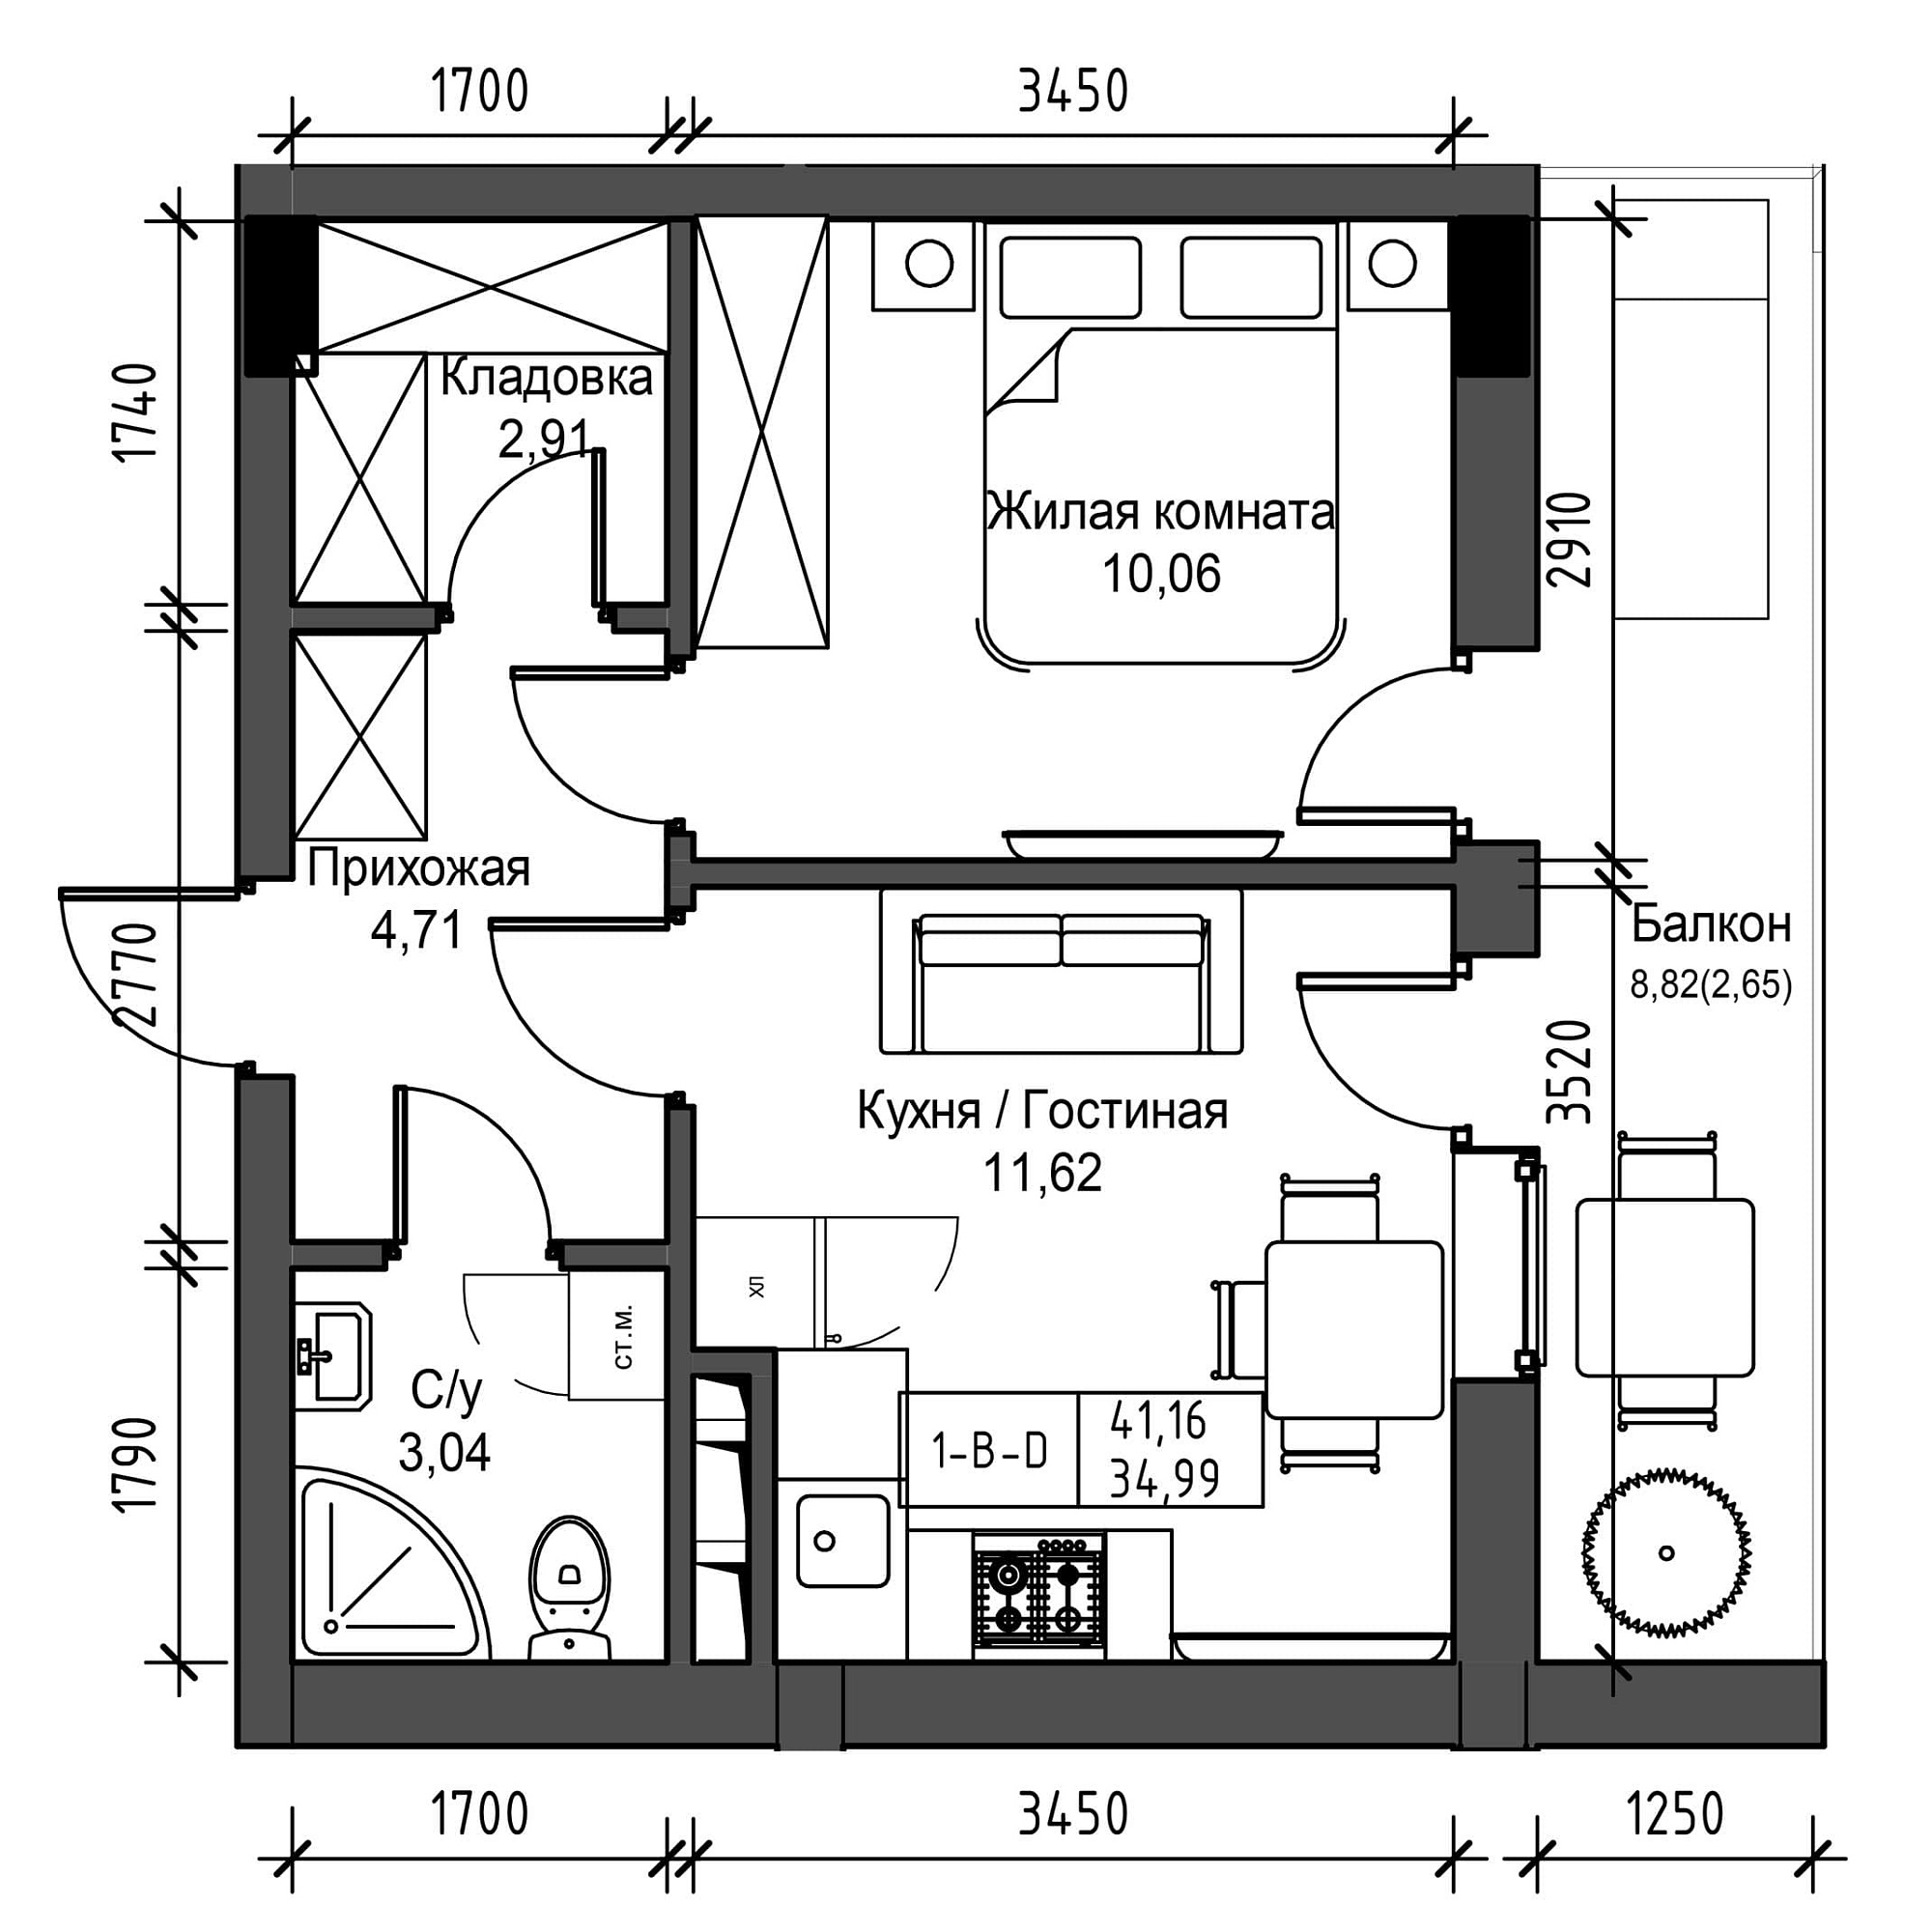 Planning 1-rm flats area 34.99m2, UM-001-09/0024.